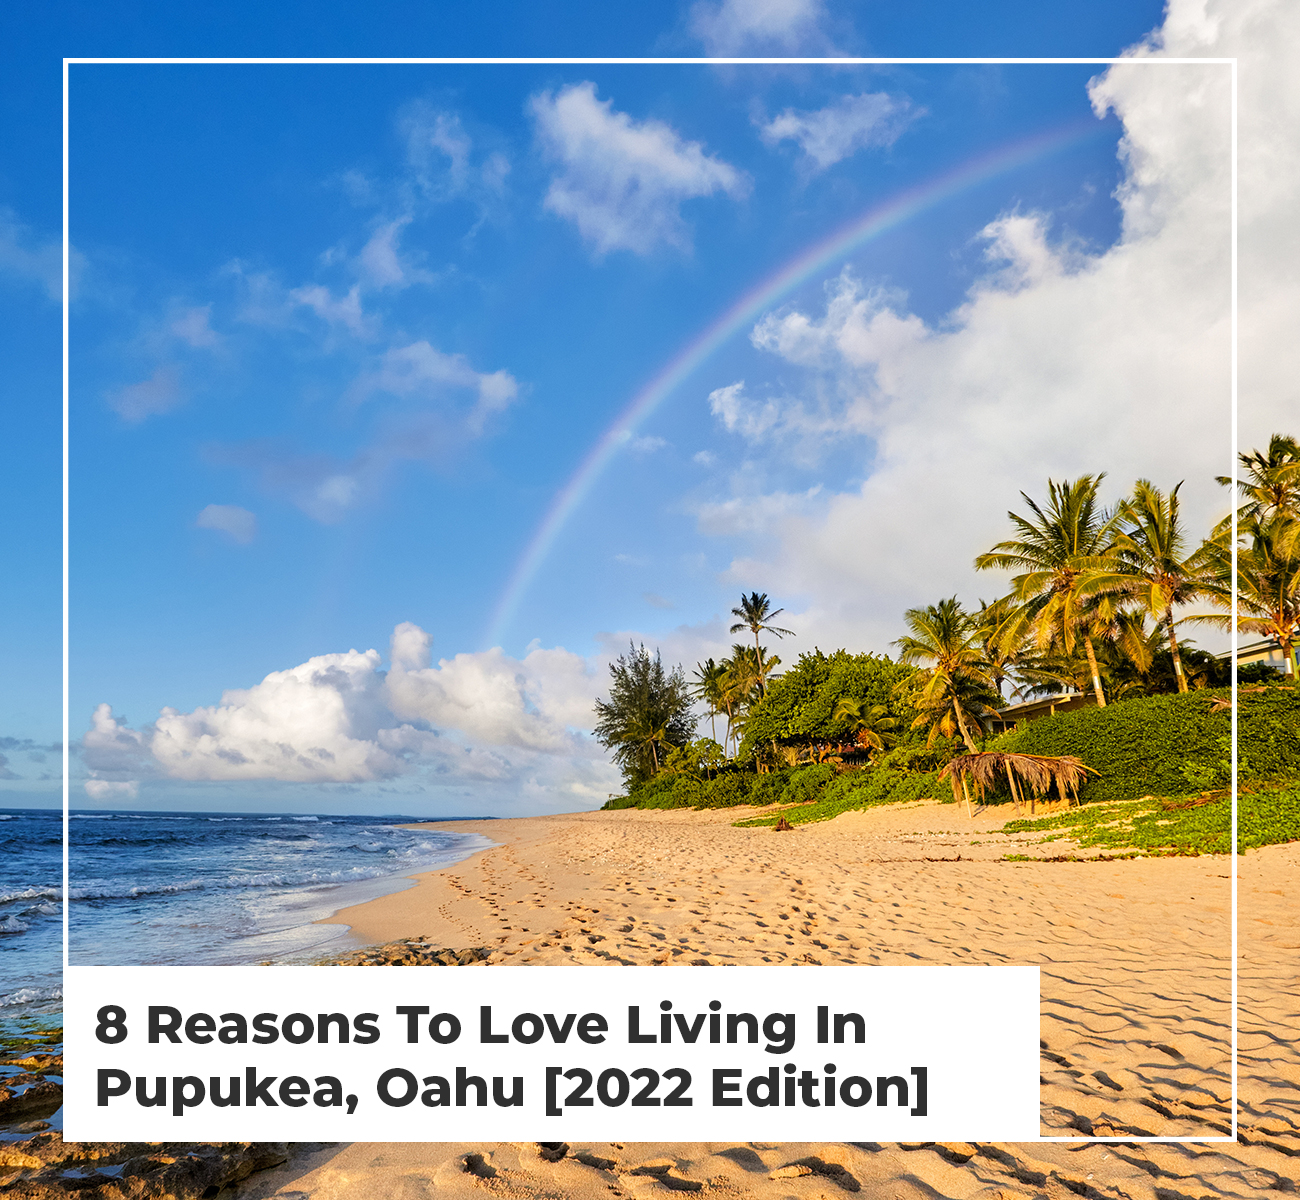 8 Reasons To Love Living In Pupukea, Oahu - Main Image